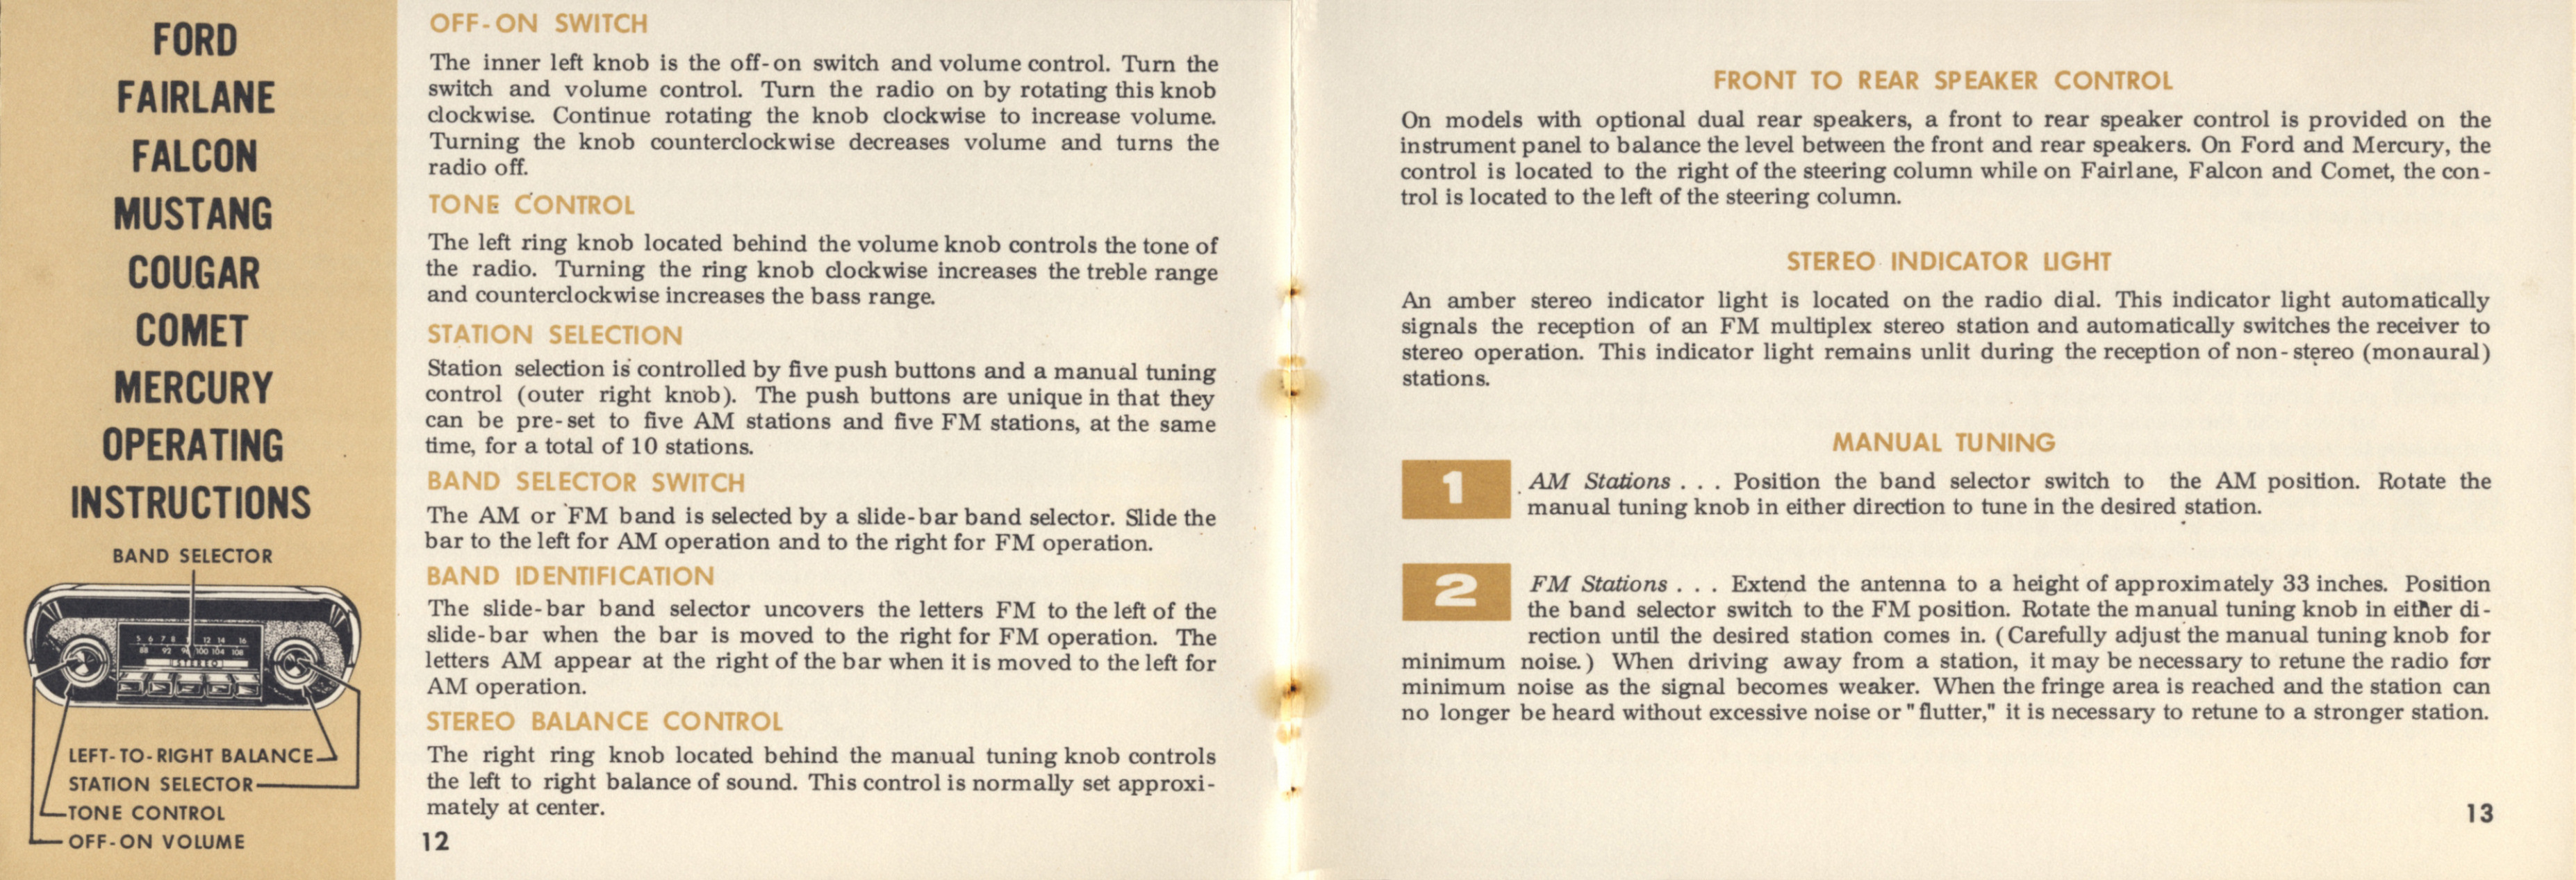 1968_Ford_Radio_Manual-12-13